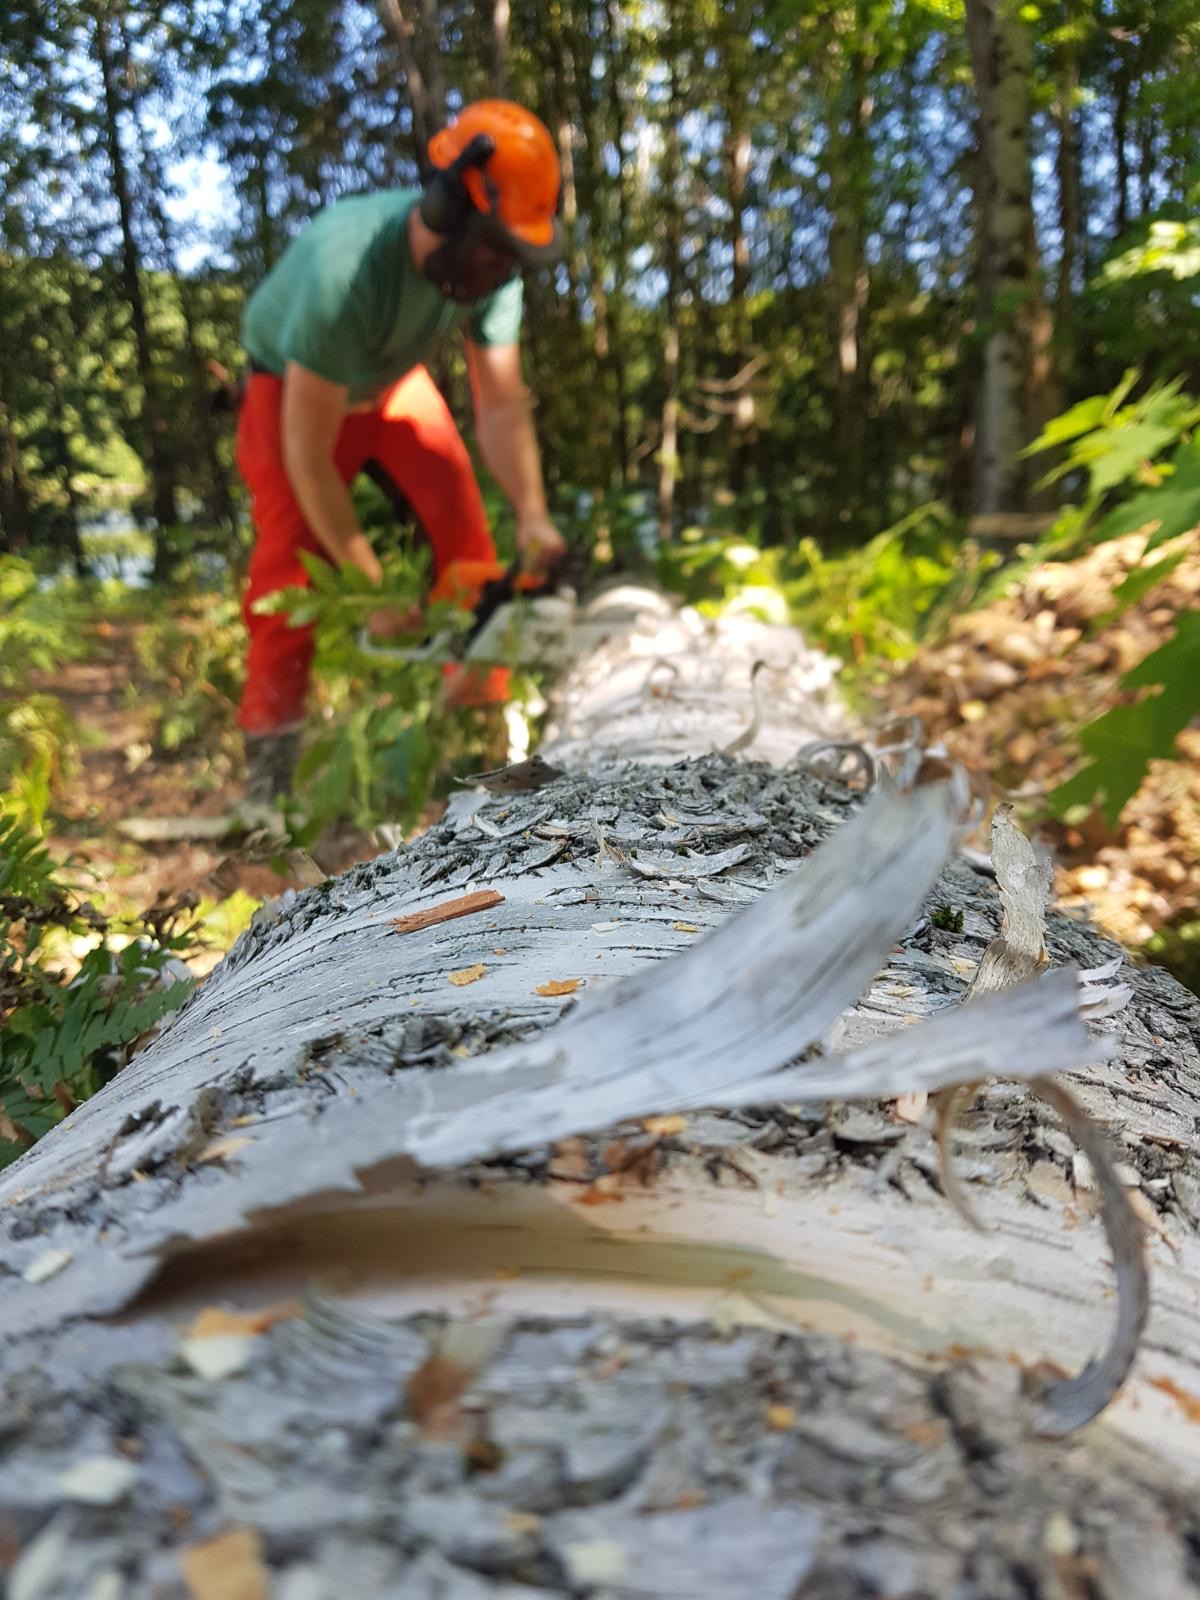 Me cutting up (“bucking”) a white birch log